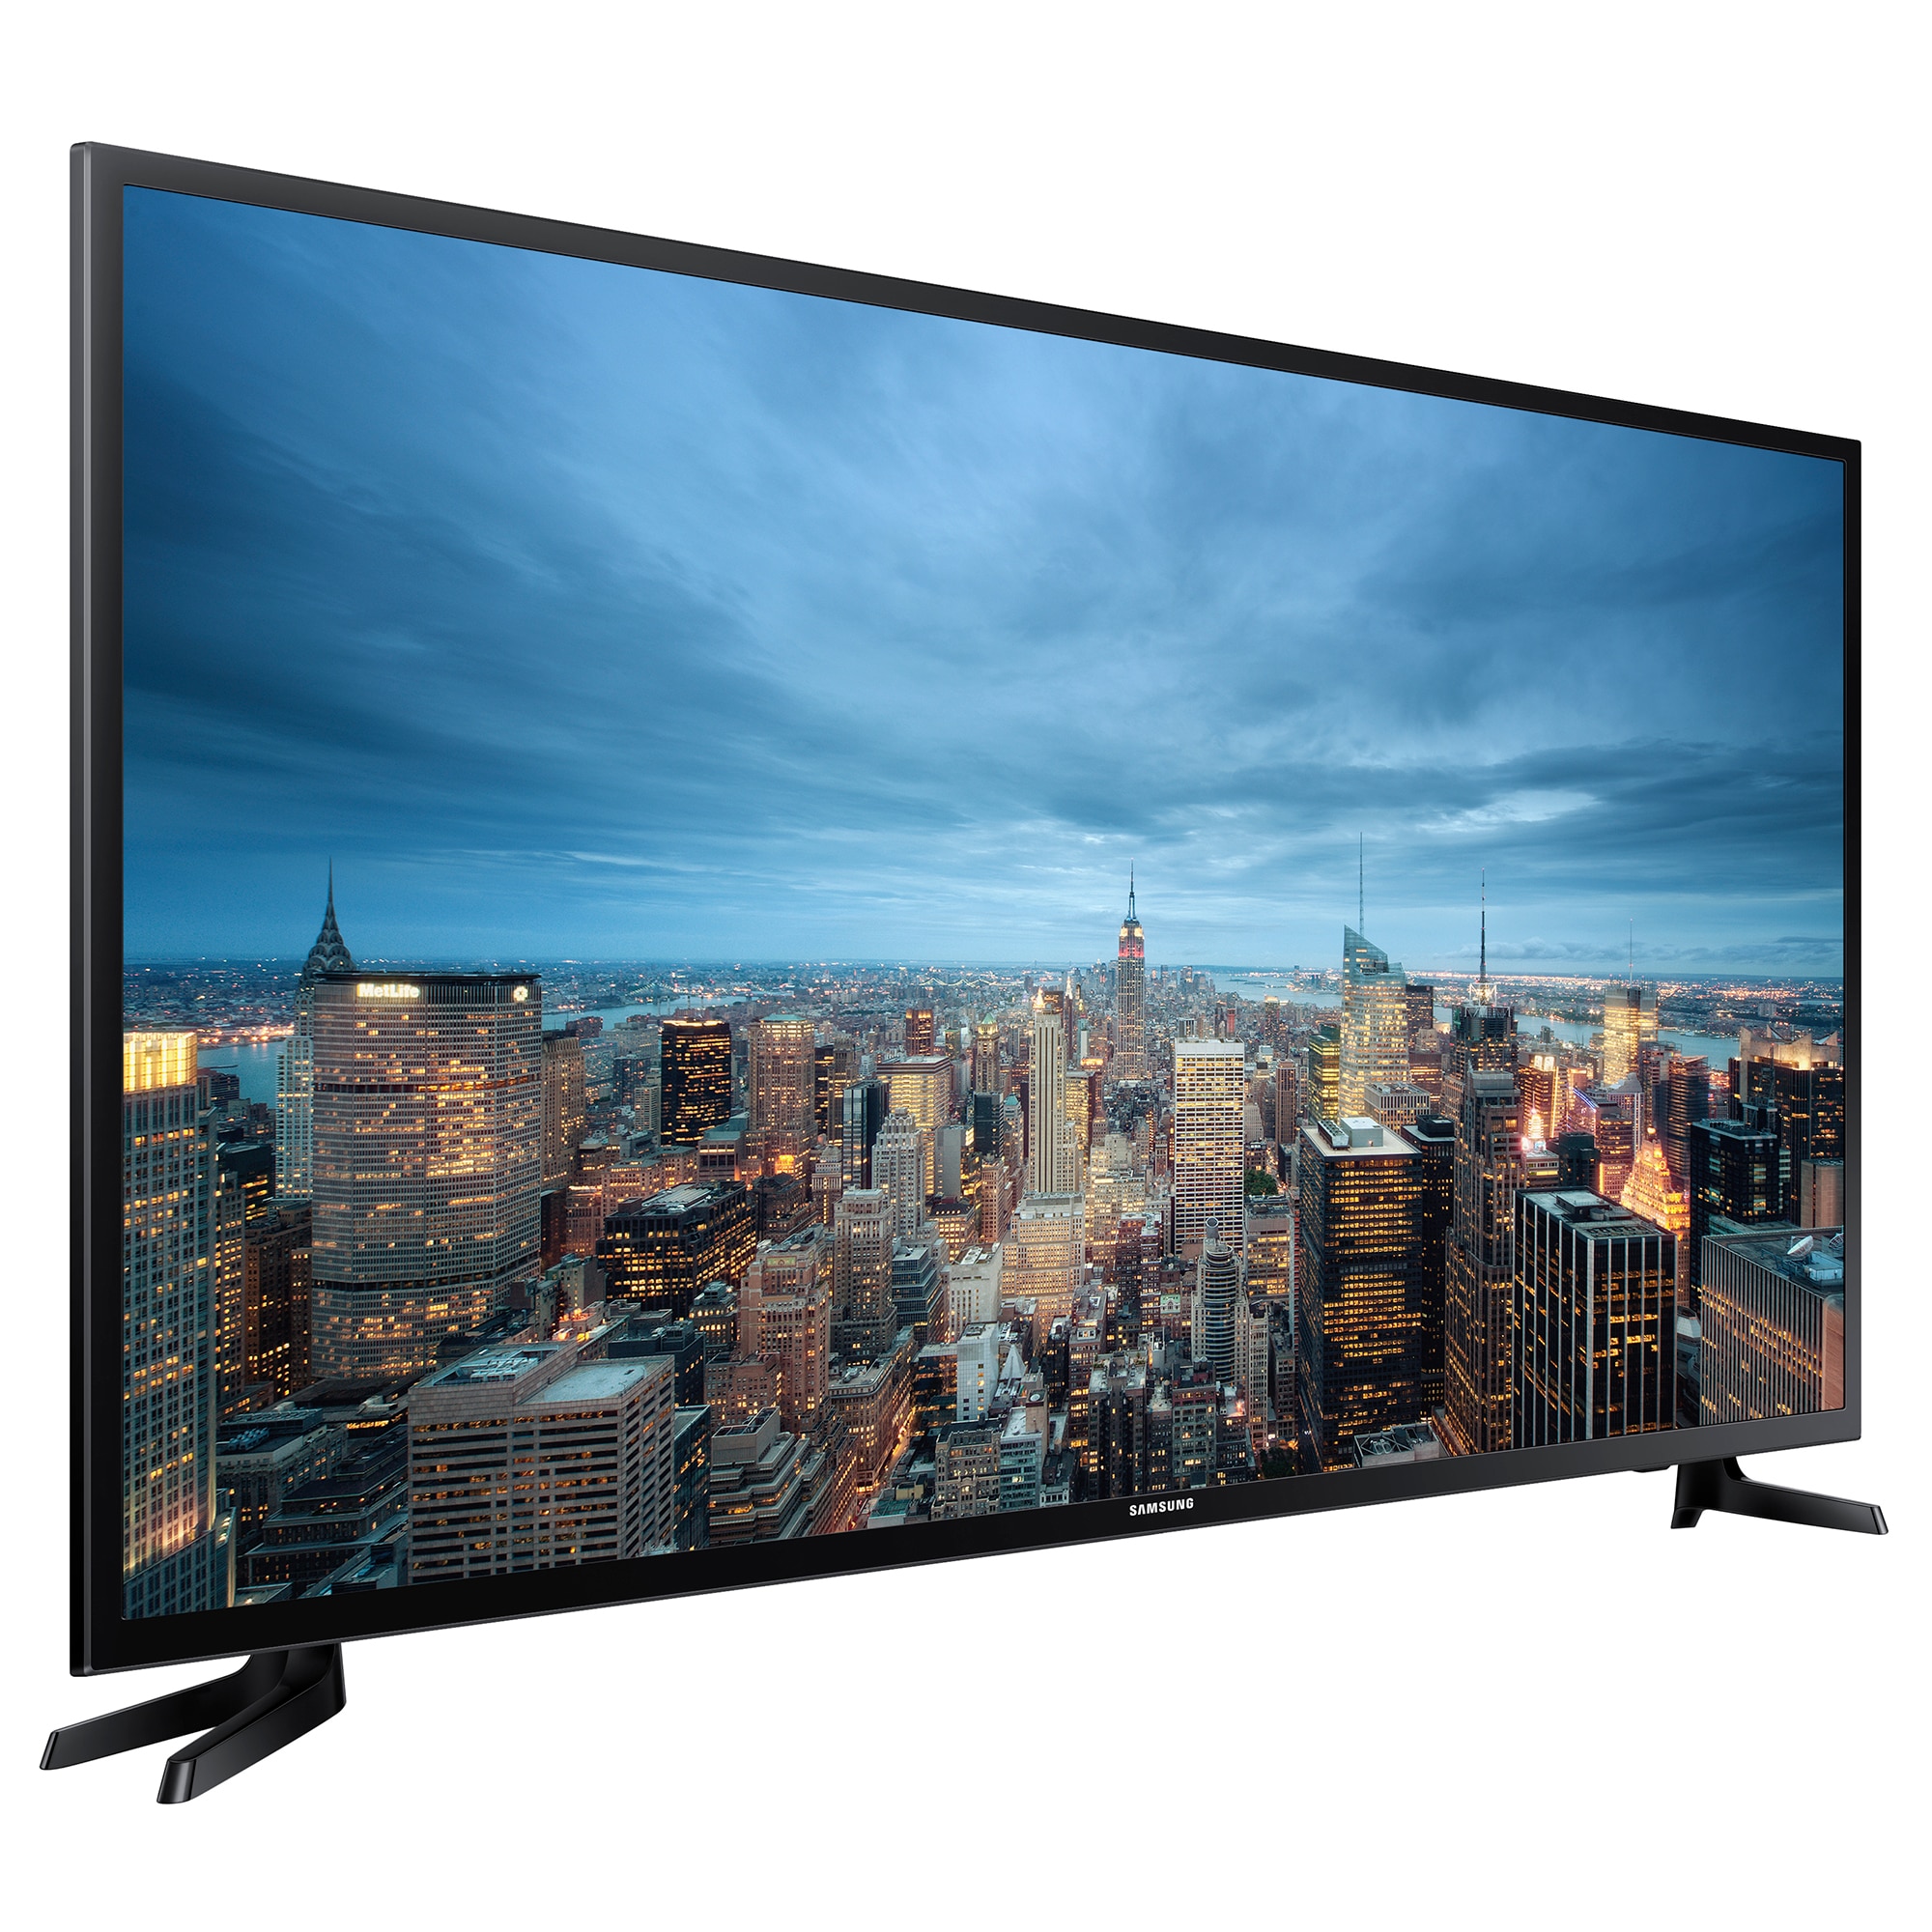 Купить телевизор смарт дешевле. Samsung ue55ju6530u. Samsung ue43ju6000u. Samsung Smart TV 40. Телевизор Samsung ue48ju6000u 48" (2015).